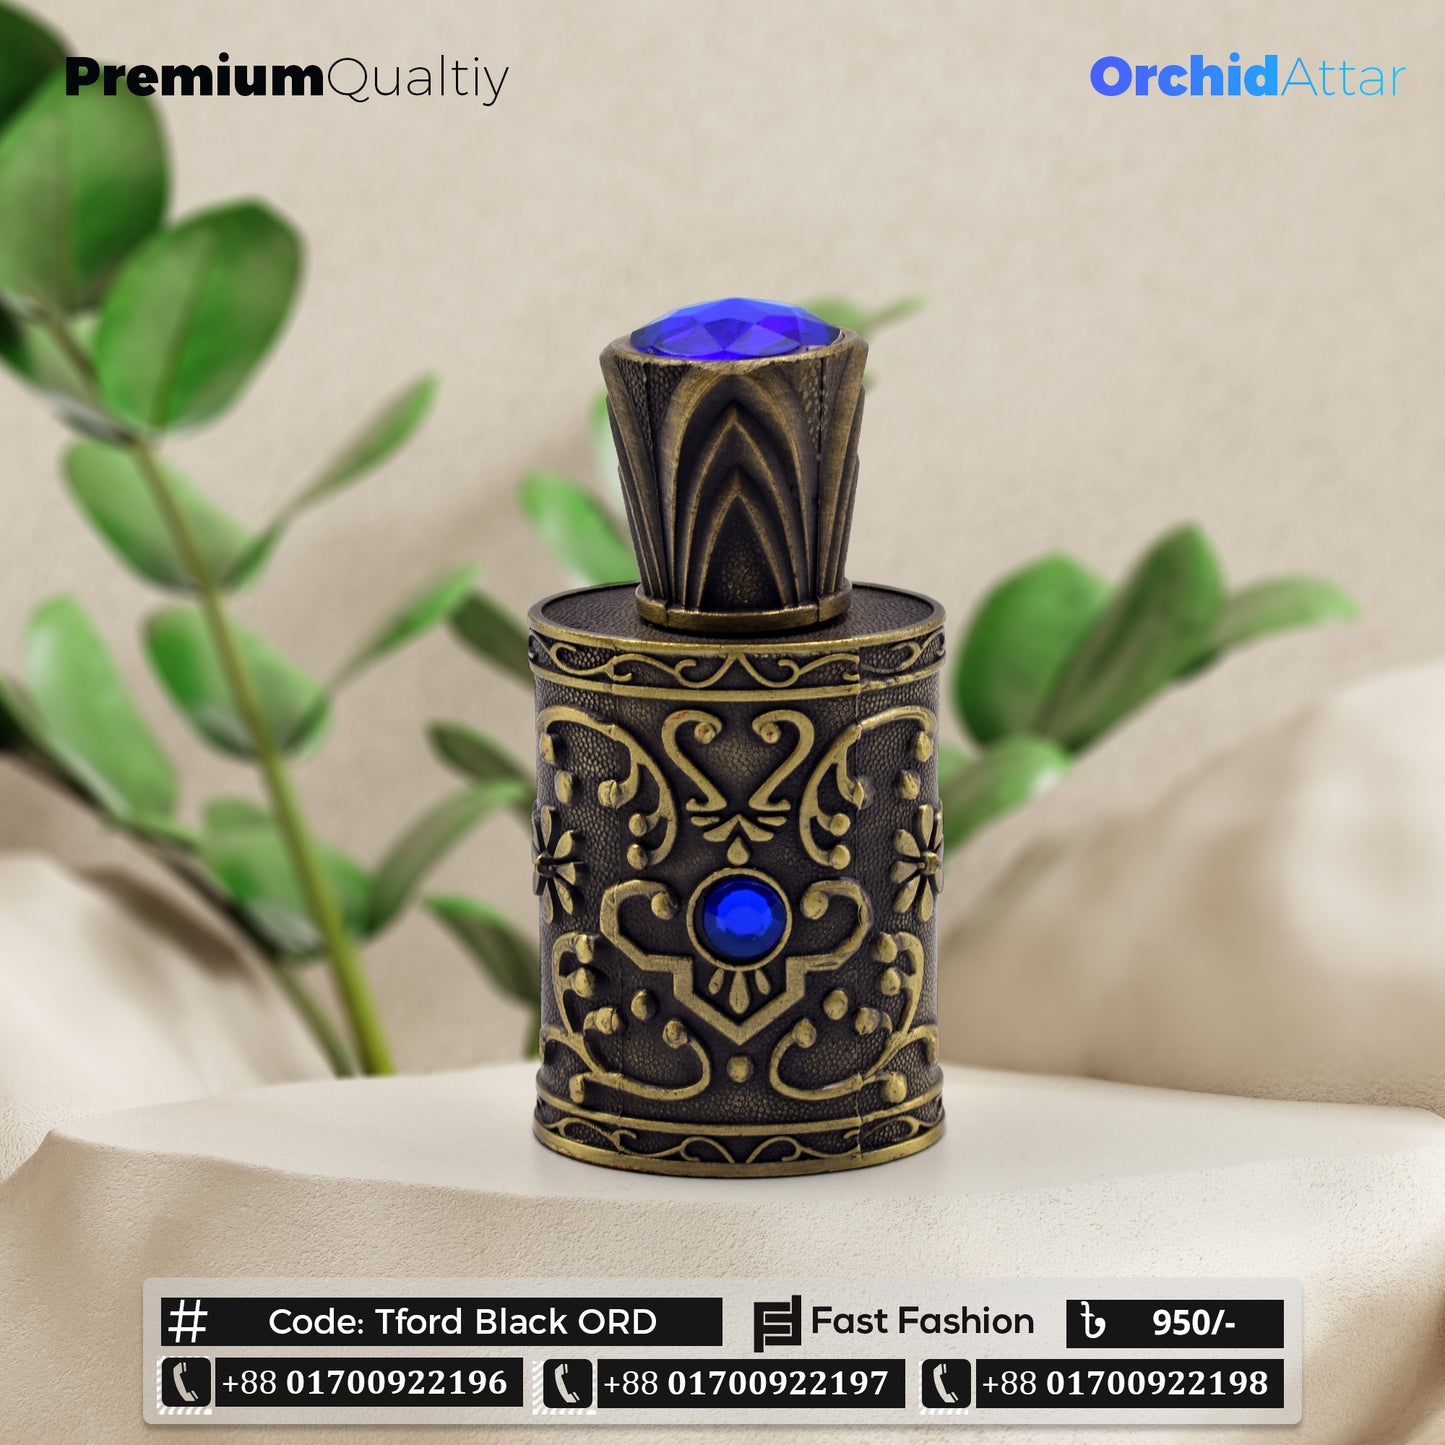 Premium Quality Tford Black ORD Attar একদম অরিজিনাল Made in India